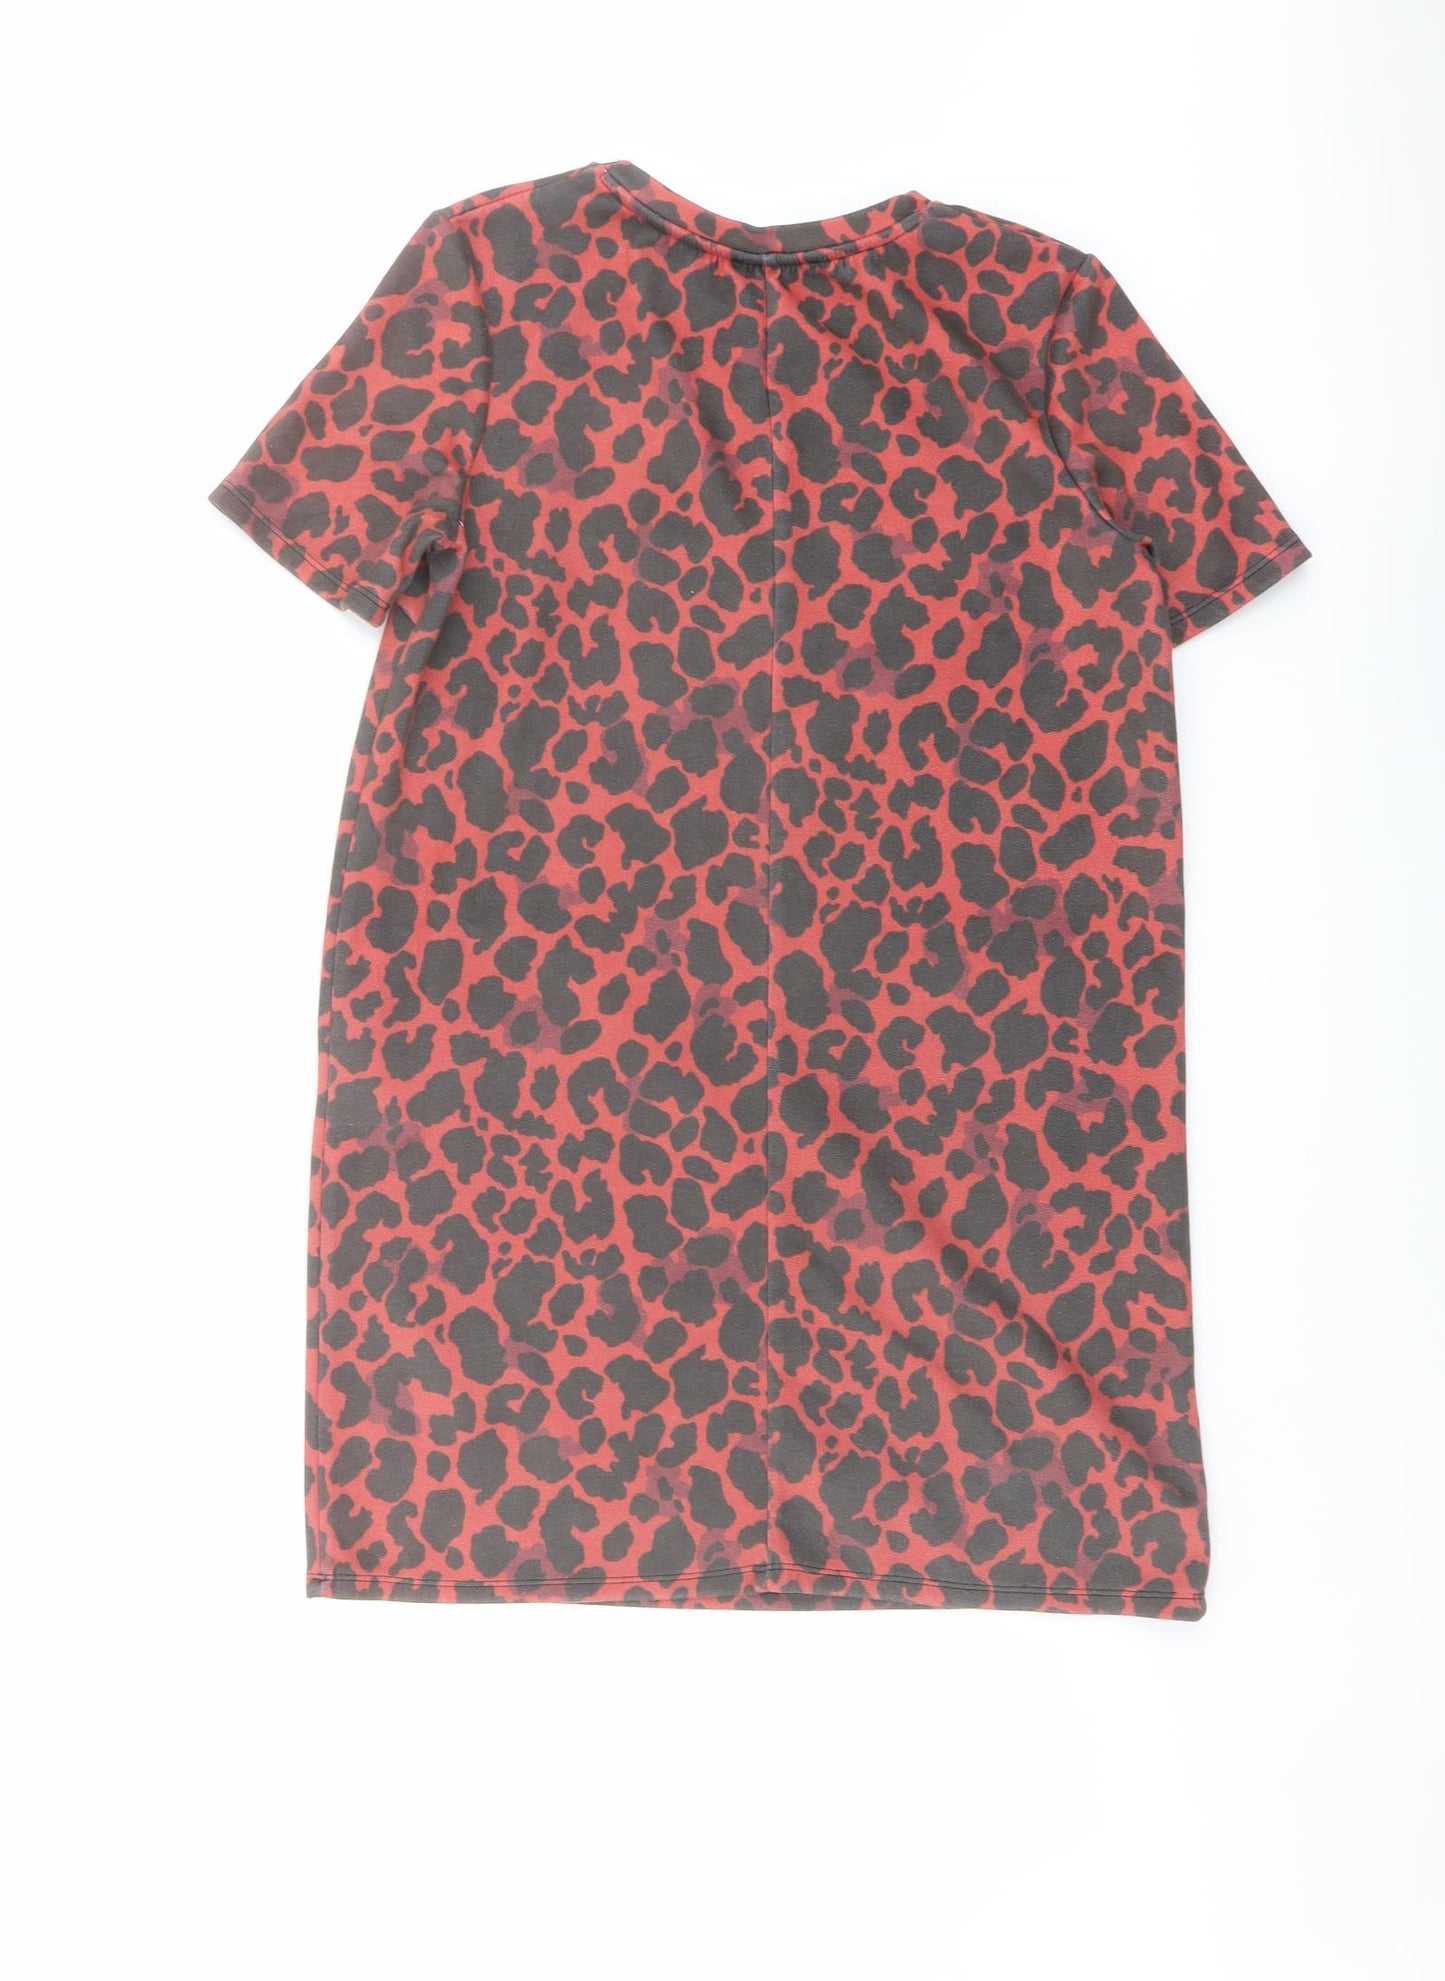 Zara Womens Red Animal Print Polyester Basic T-Shirt Size S Round Neck - Leopard Print